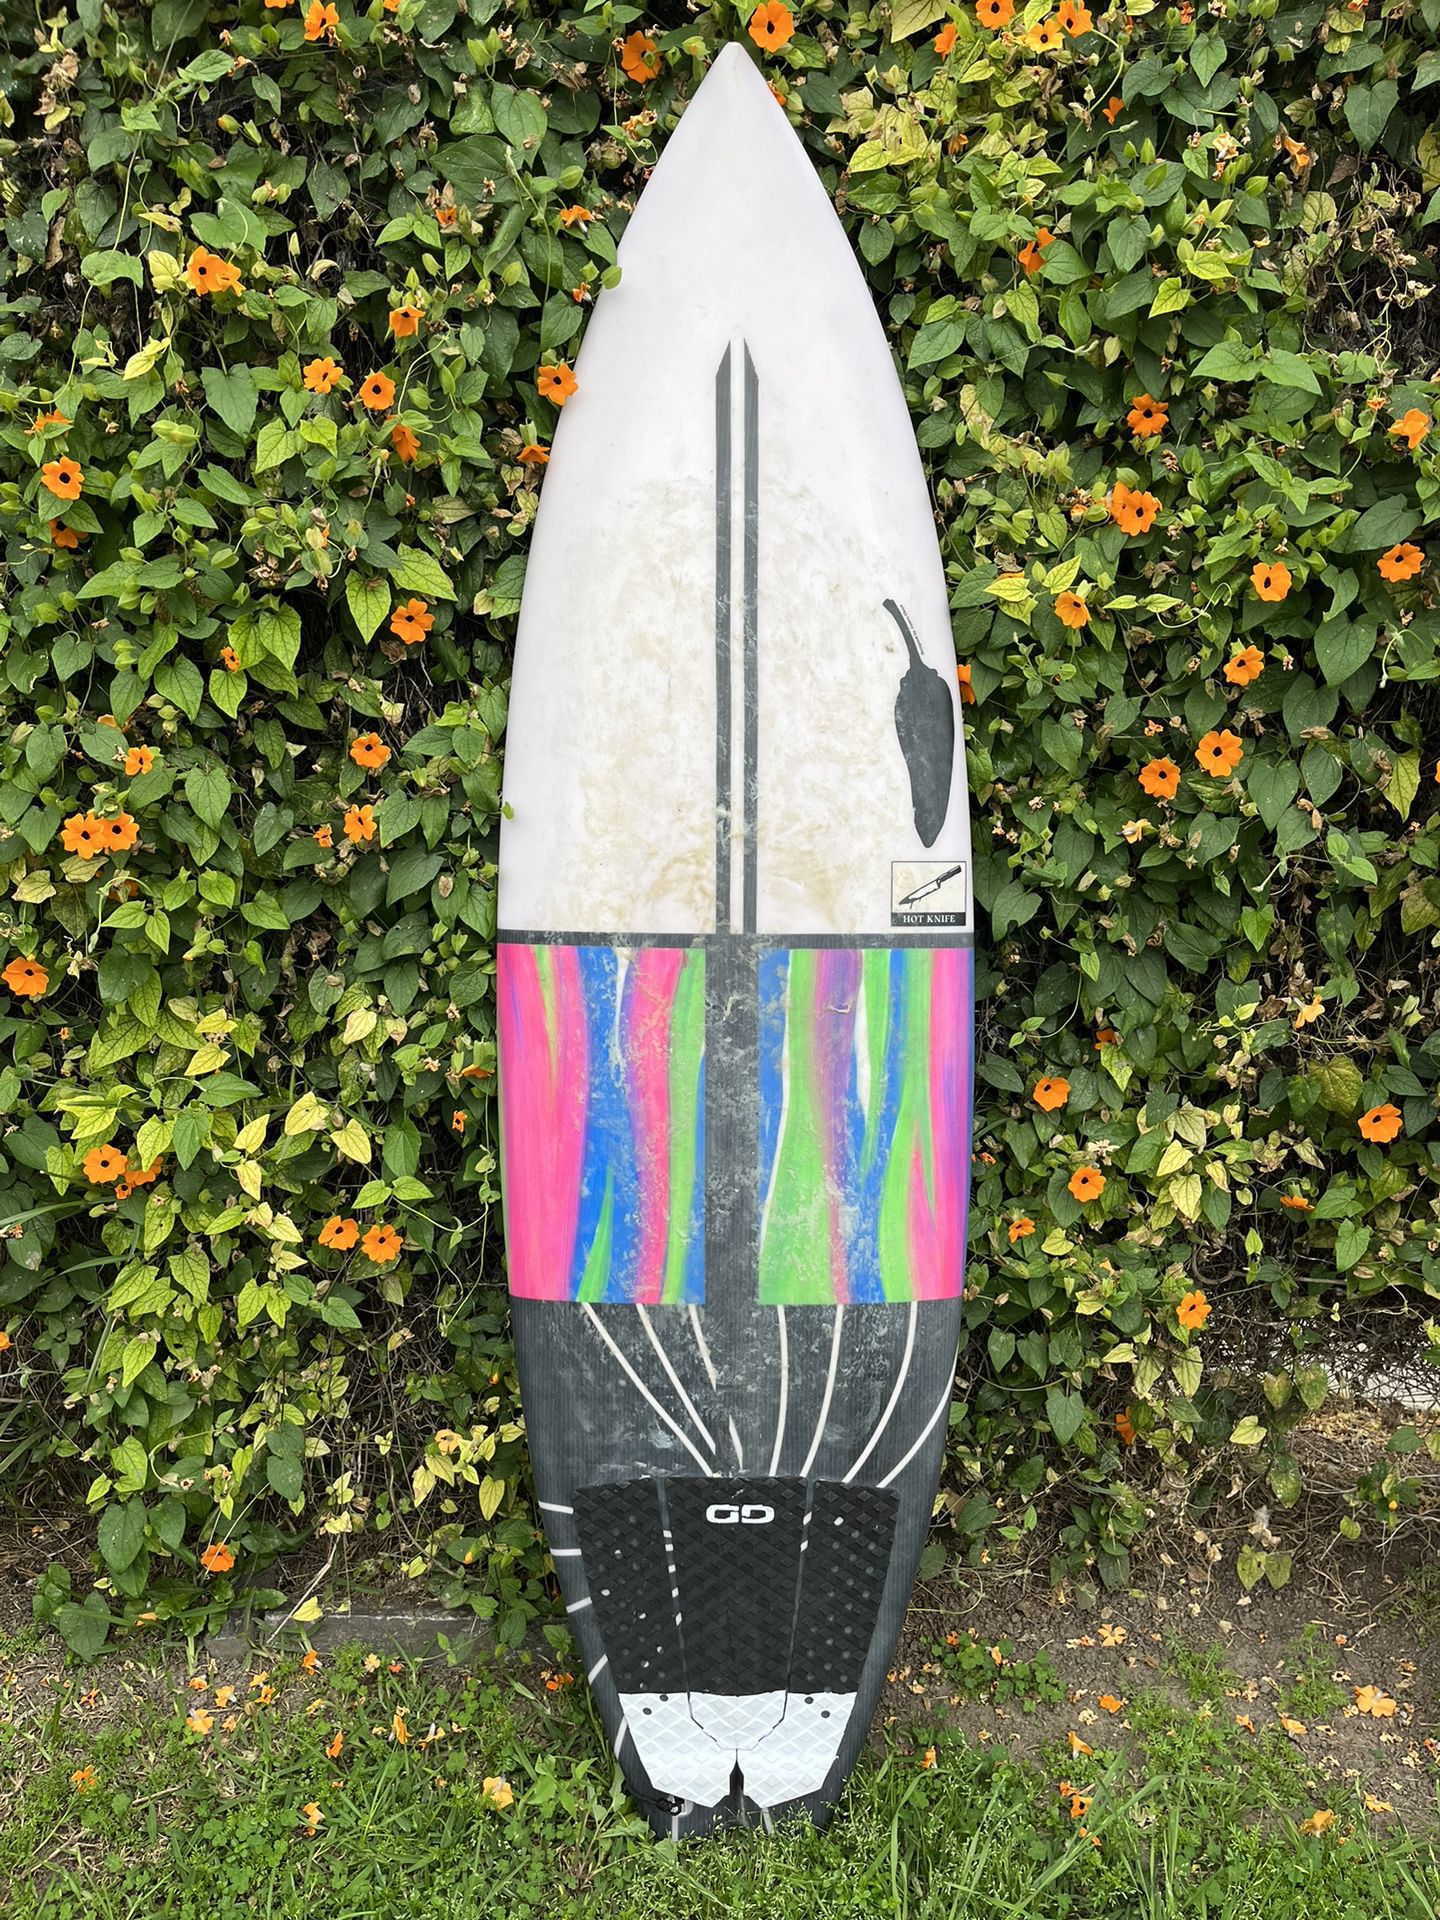 Surfboard 5’6